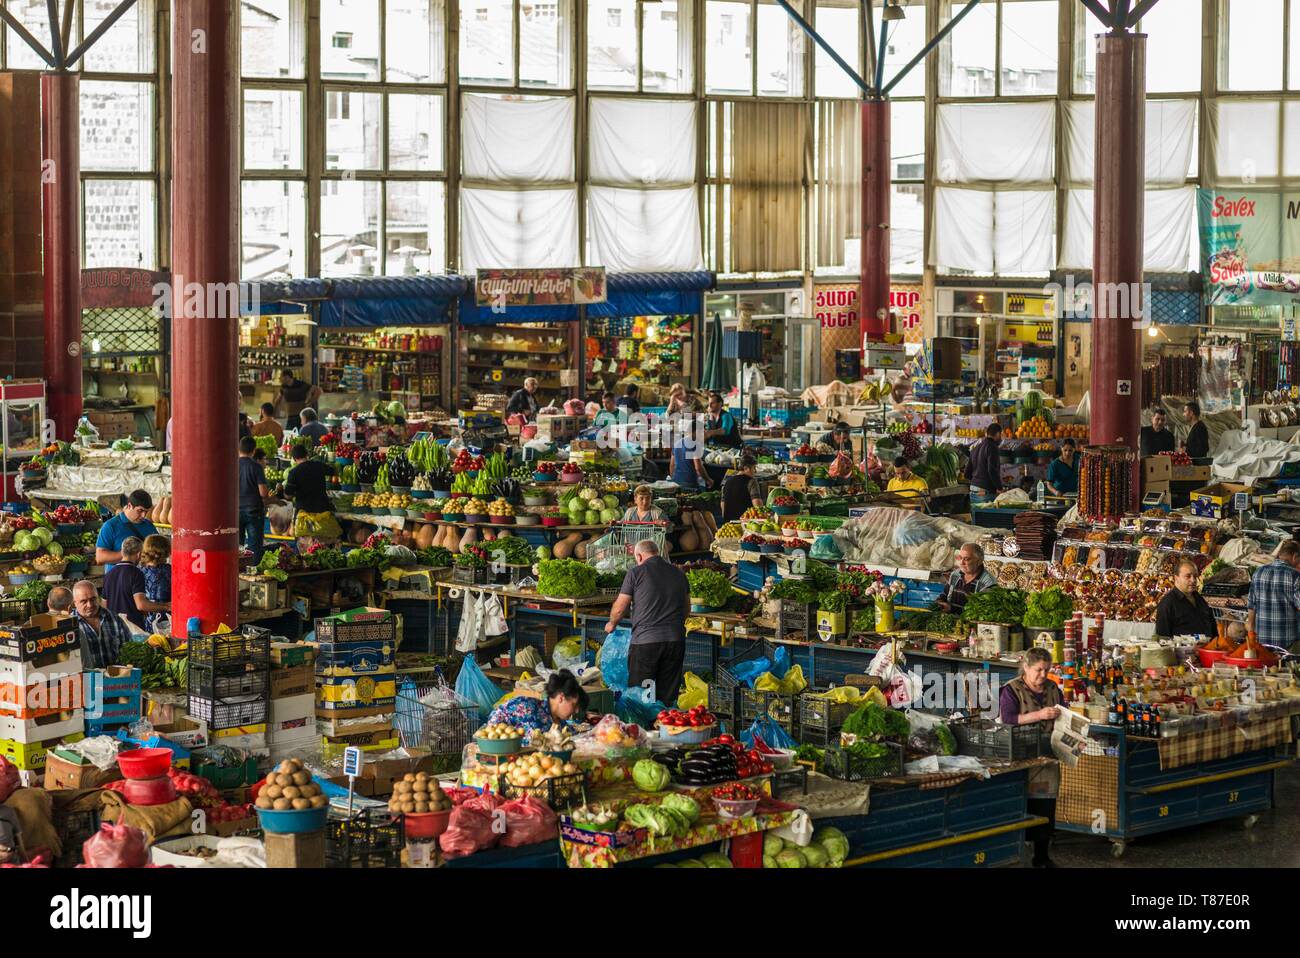 Armenia, Yerevan, G.U.M. Mercado, mercado de alimentos hall Foto de stock